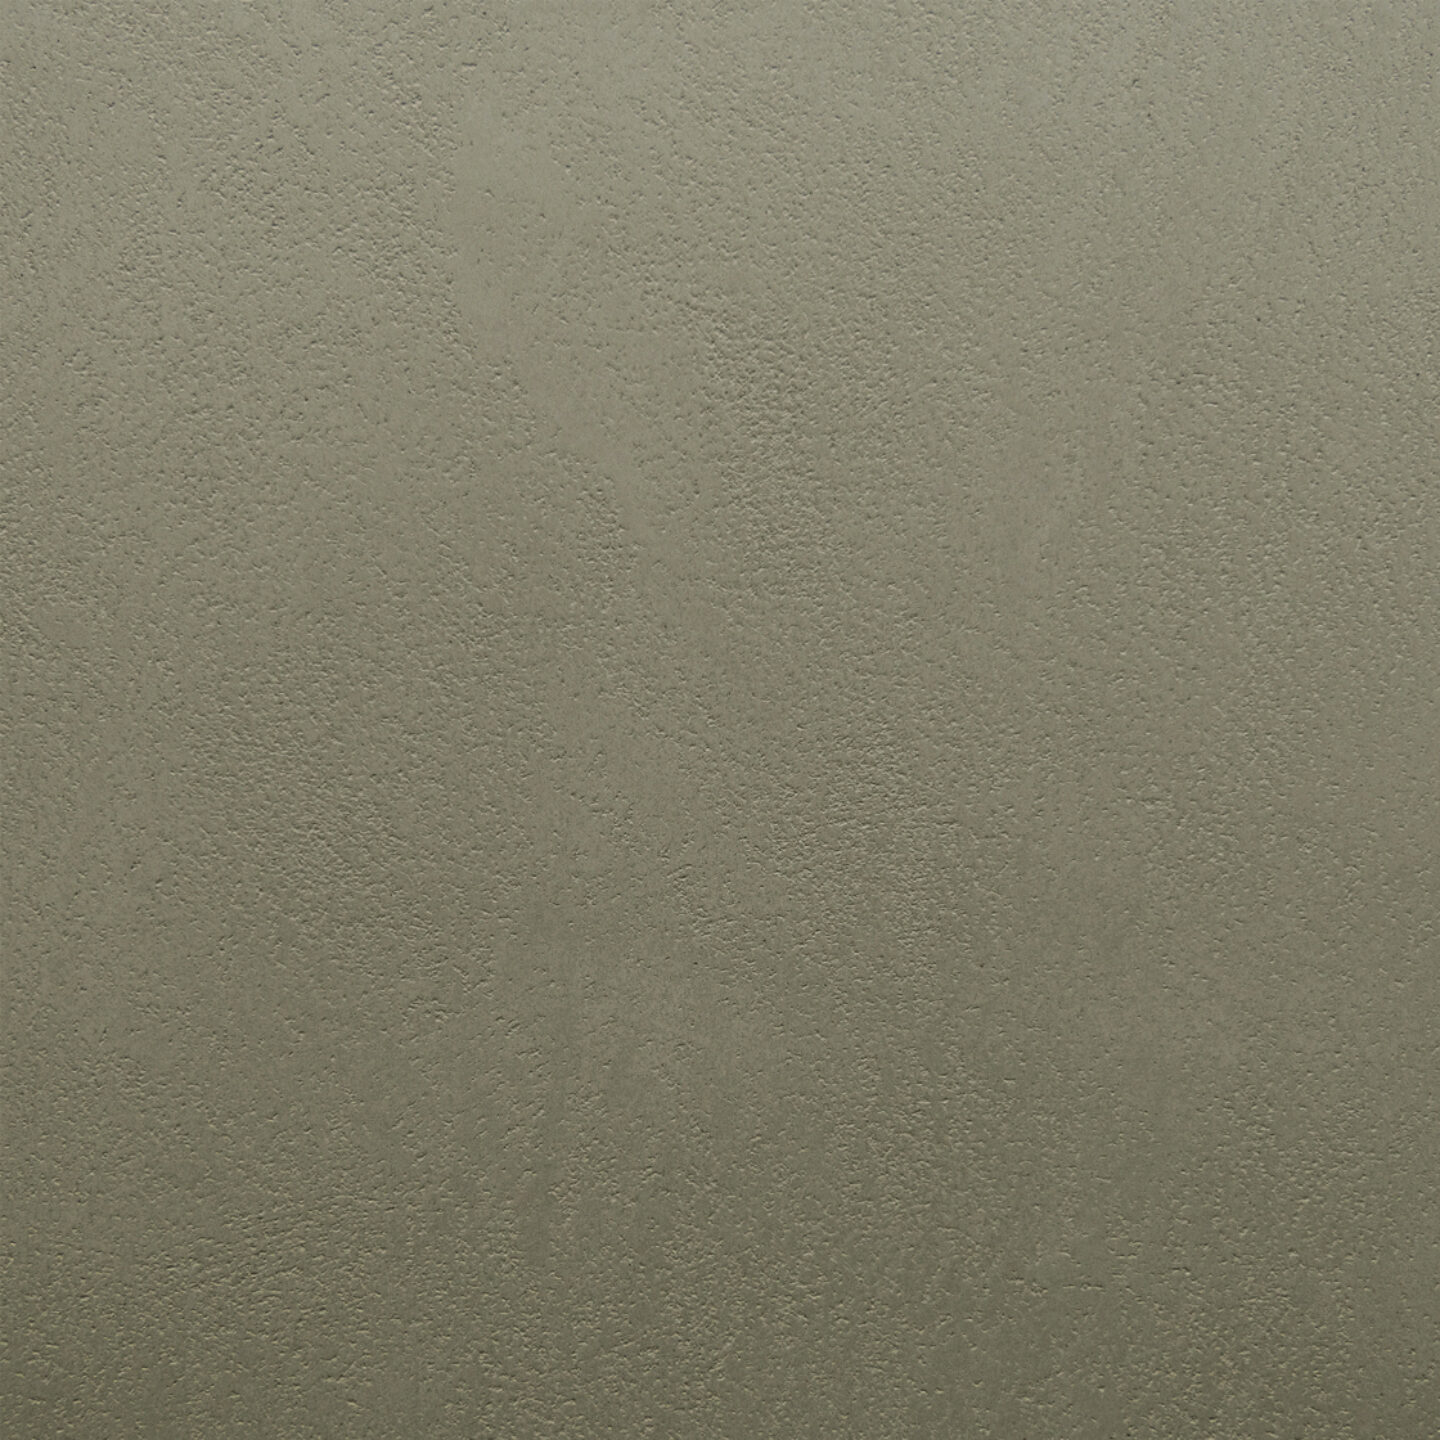 Close up of Armourcoat leatherstone exterior polished plaster finish - 66